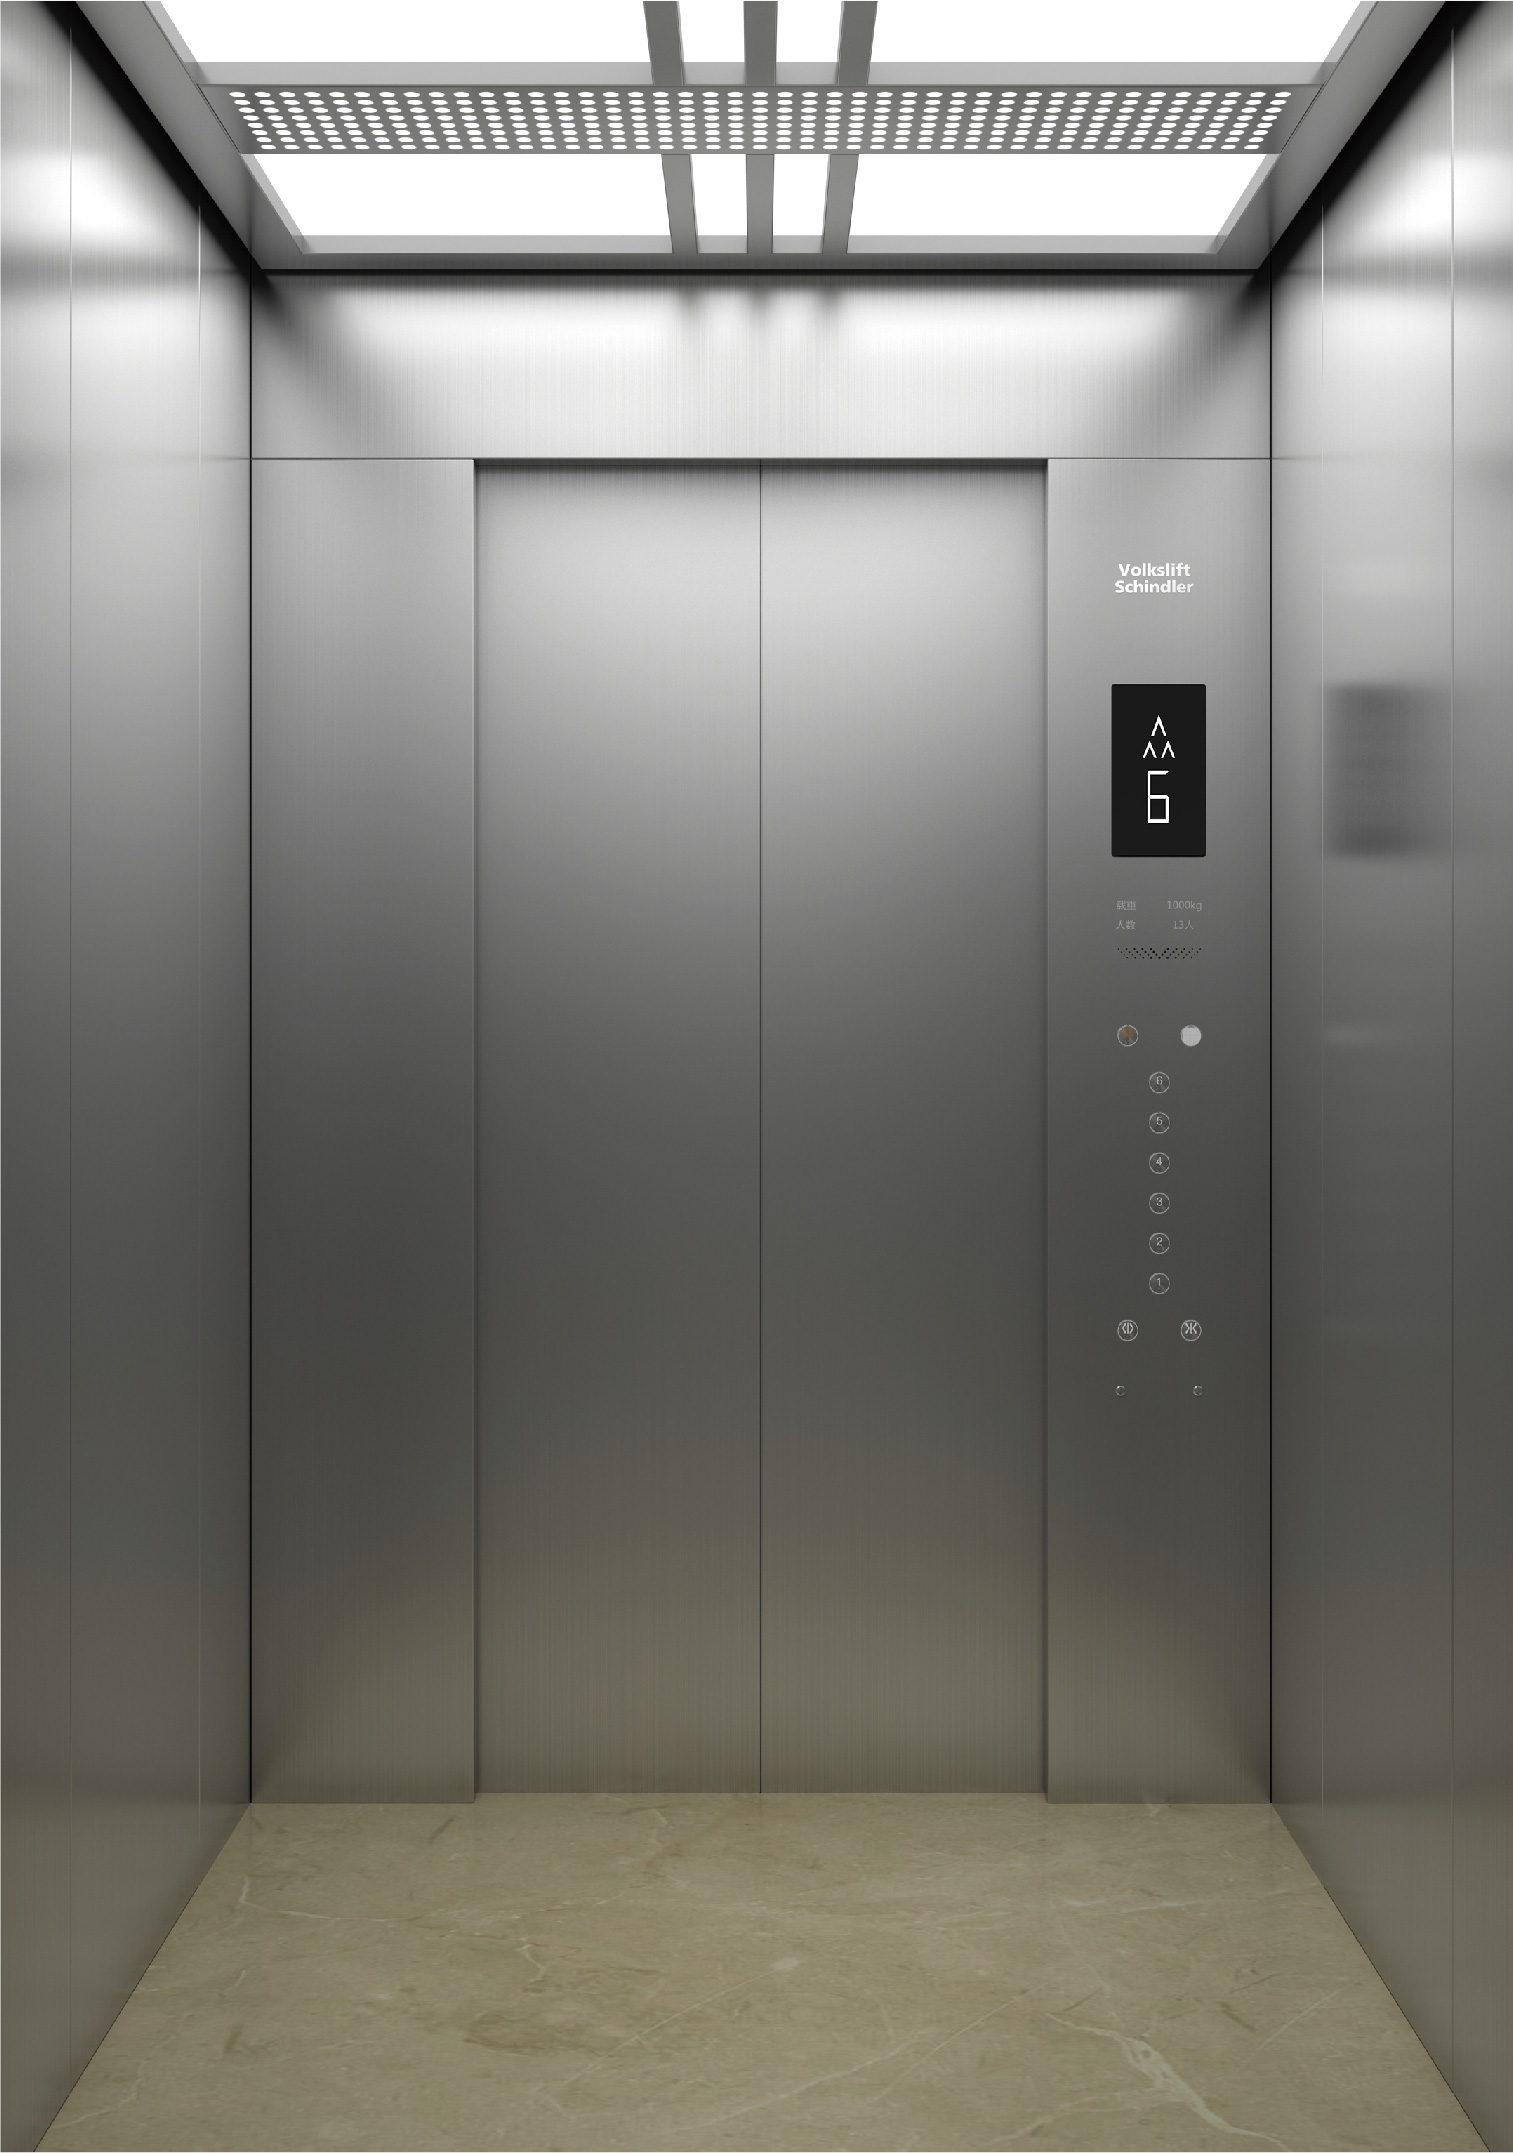 v350 passenger elevator | 沃克斯迅达电梯 | 新沃途